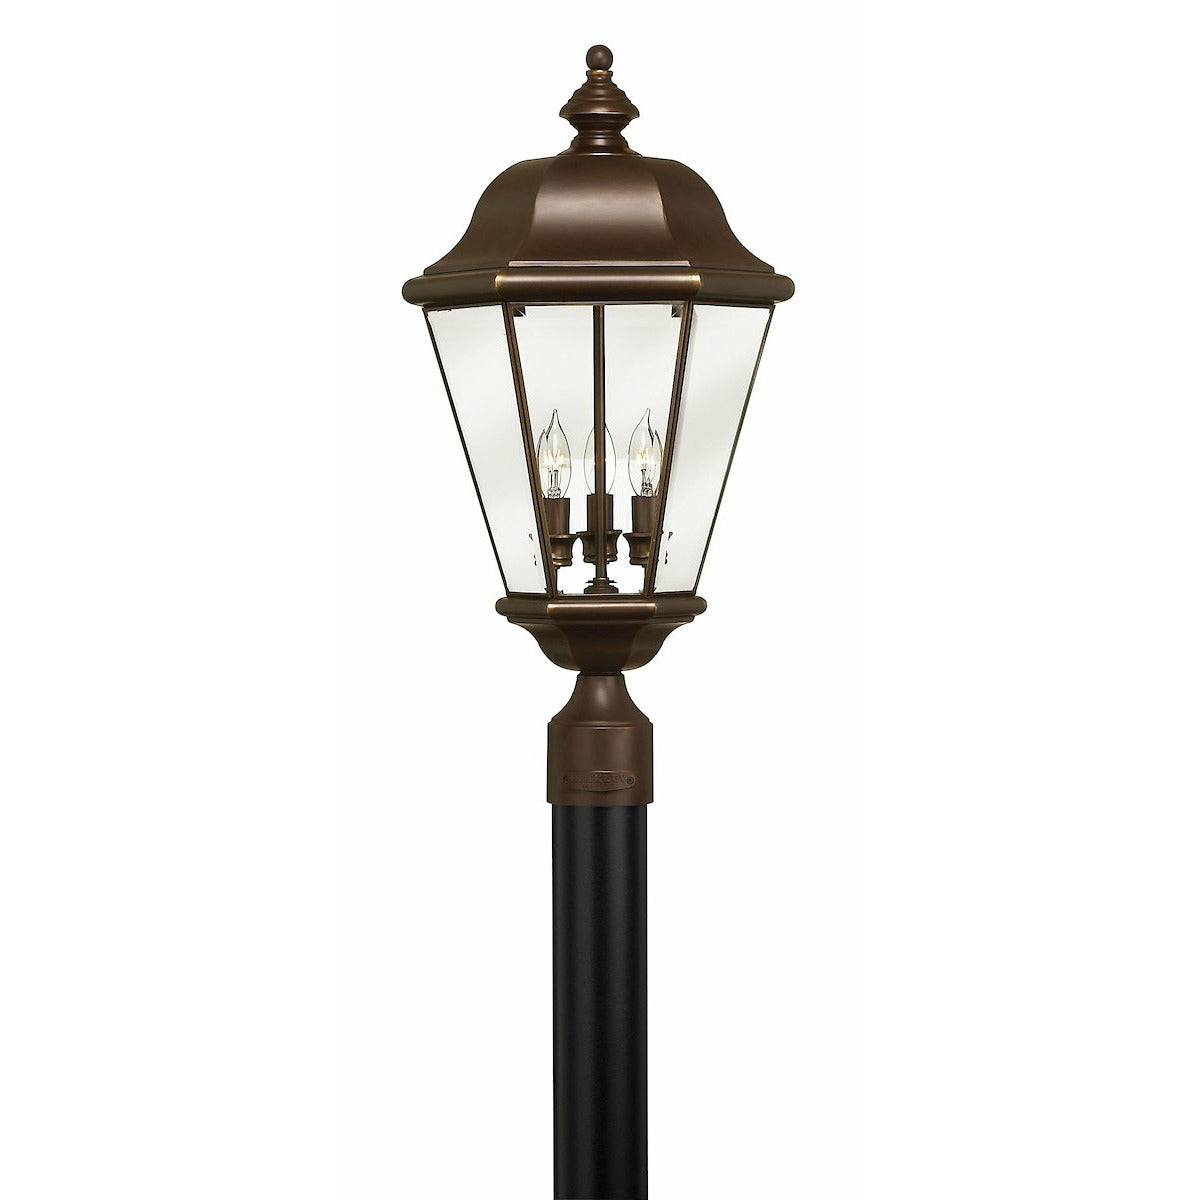 Clifton Park Post Light Copper Bronze